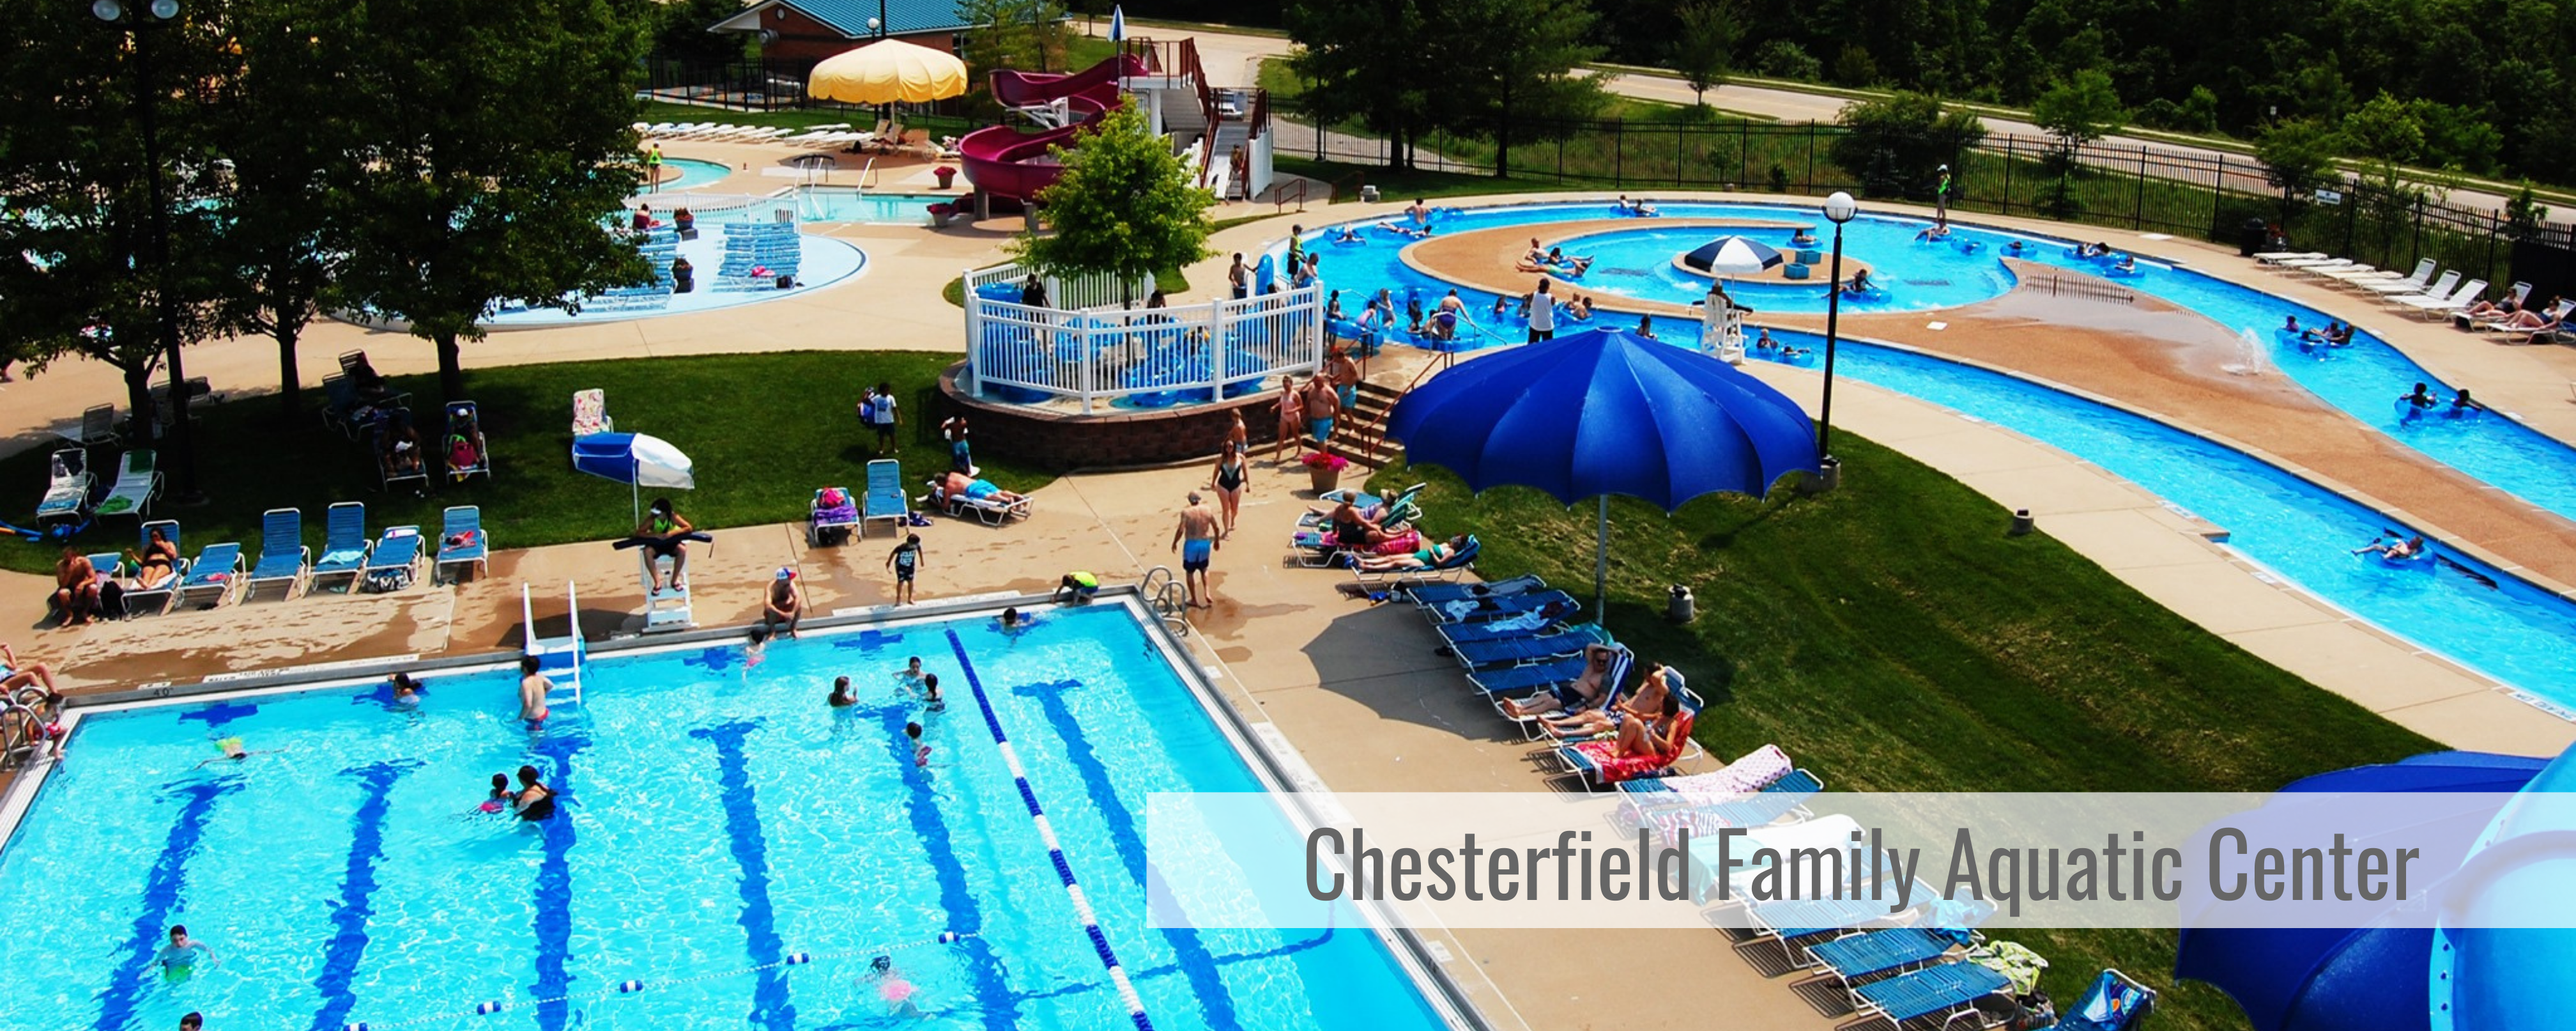 Chesterfield Family Aquatic Center